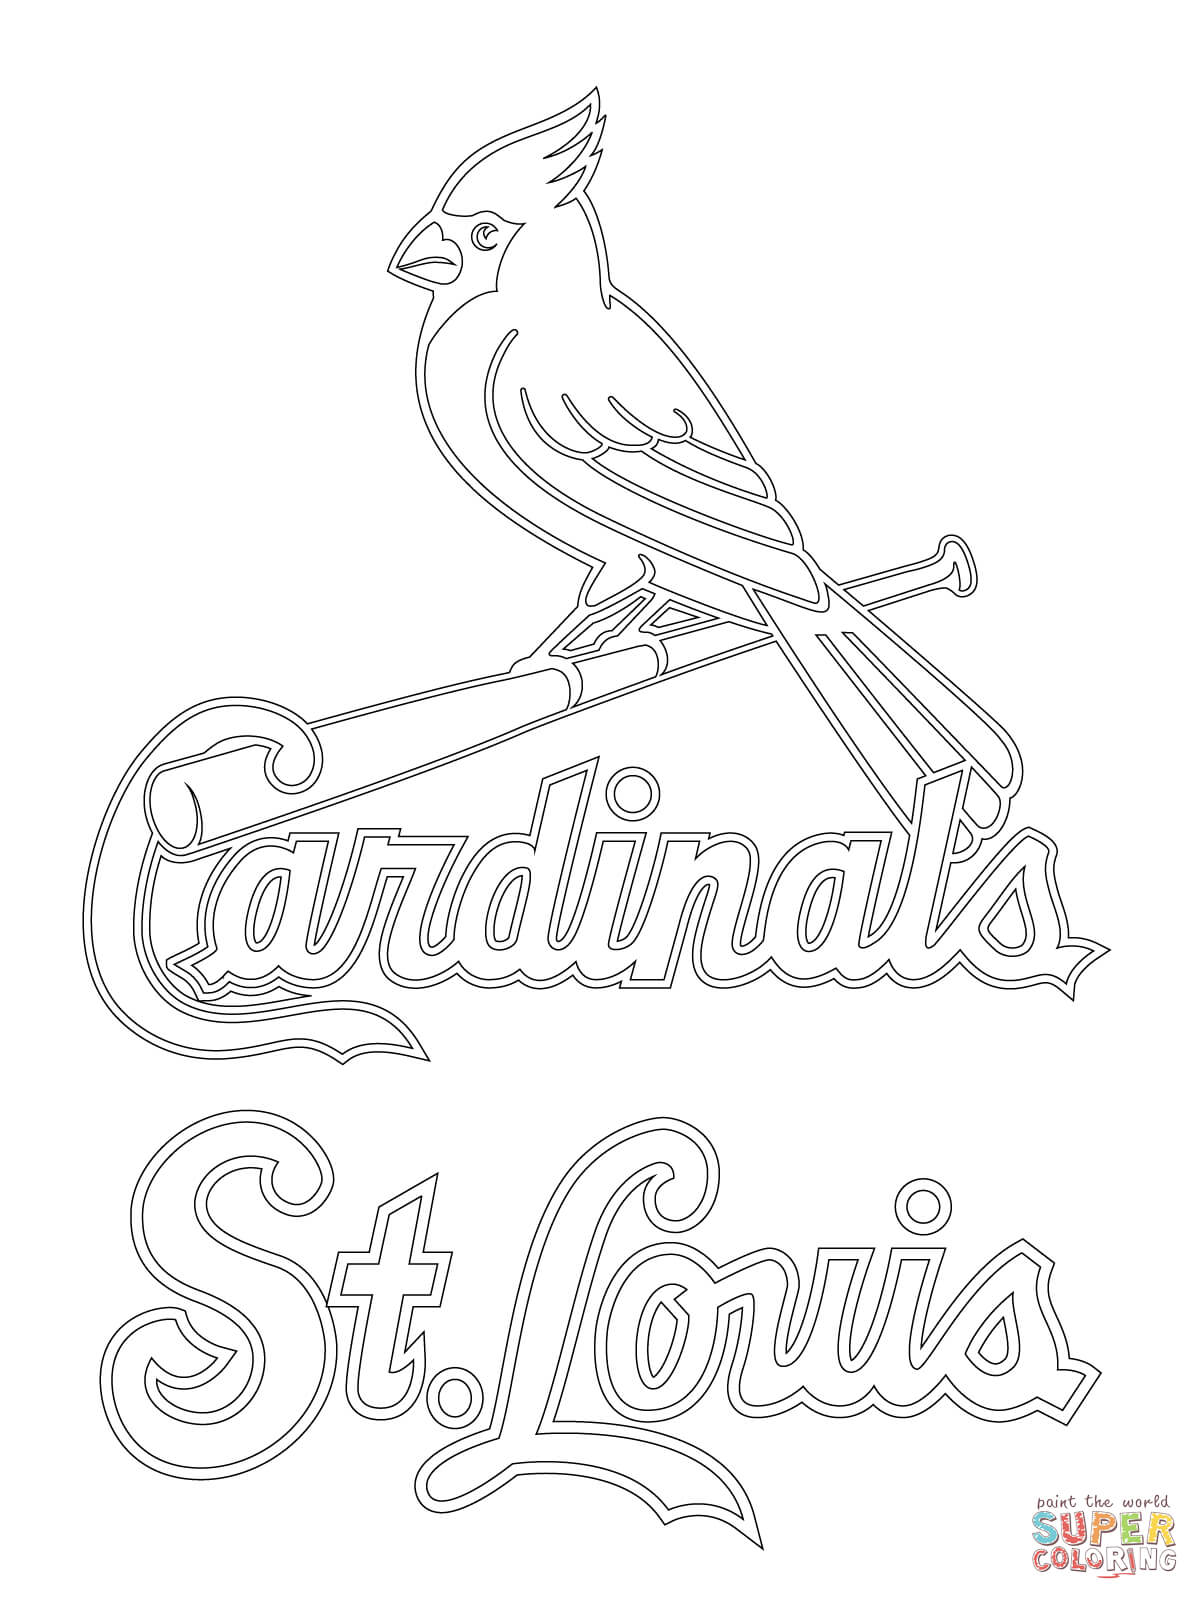 7 Pics of Cardinal Mascot Coloring Pages - St. Louis Cardinals ...